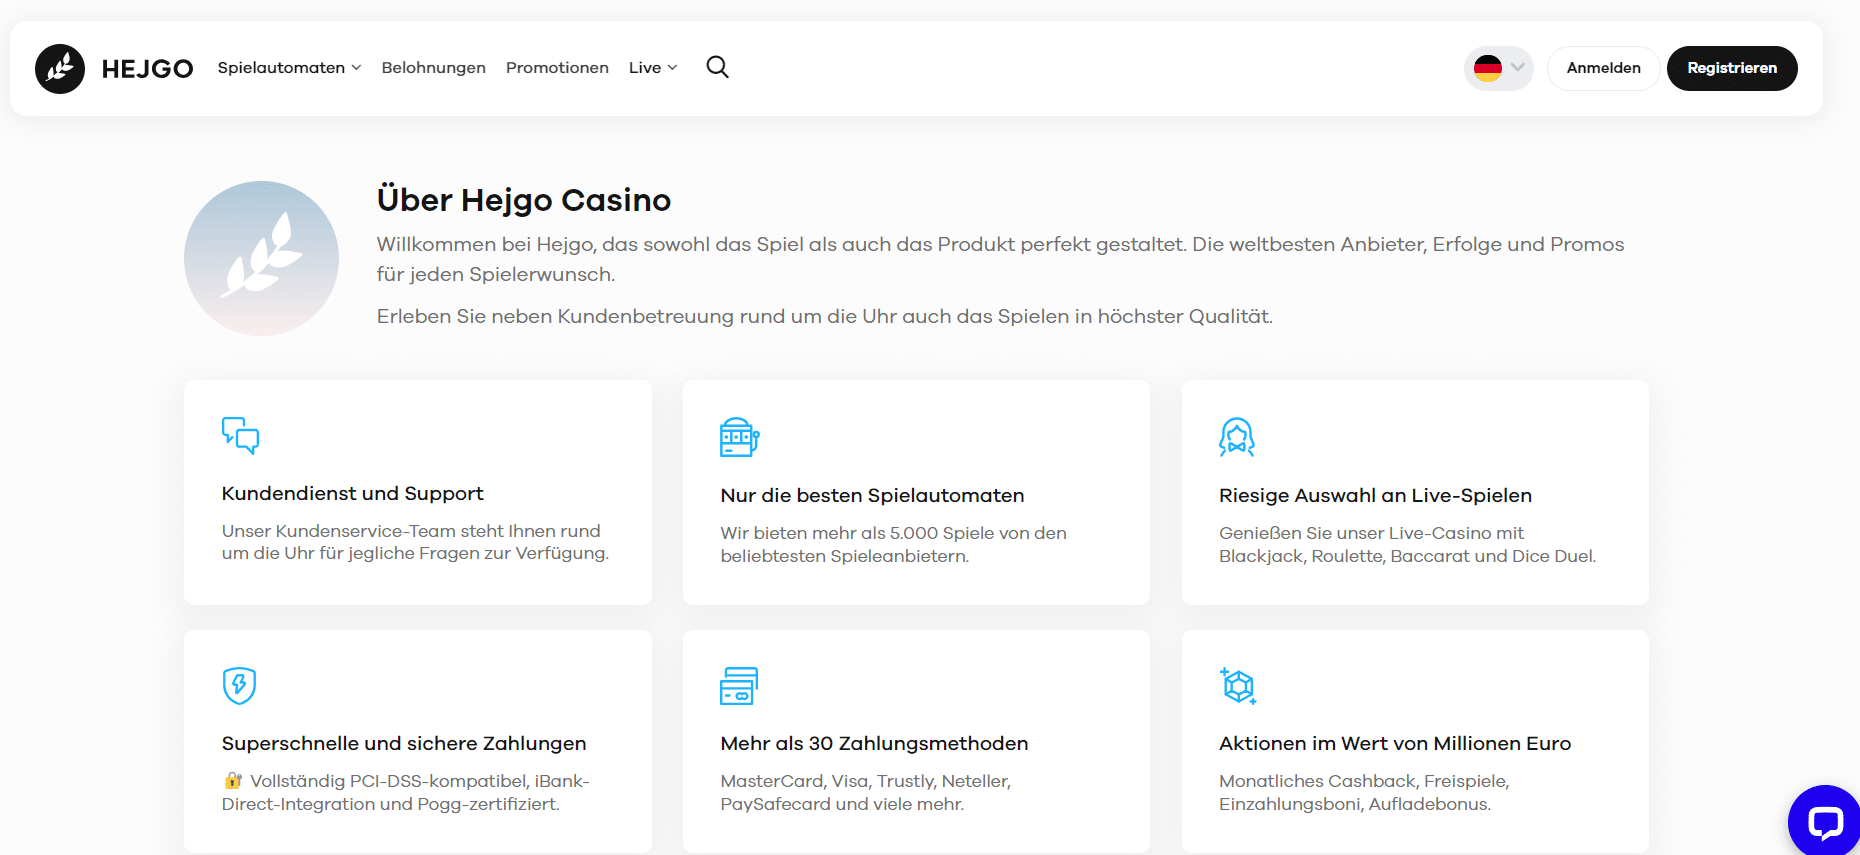 Hejgo Casino Über